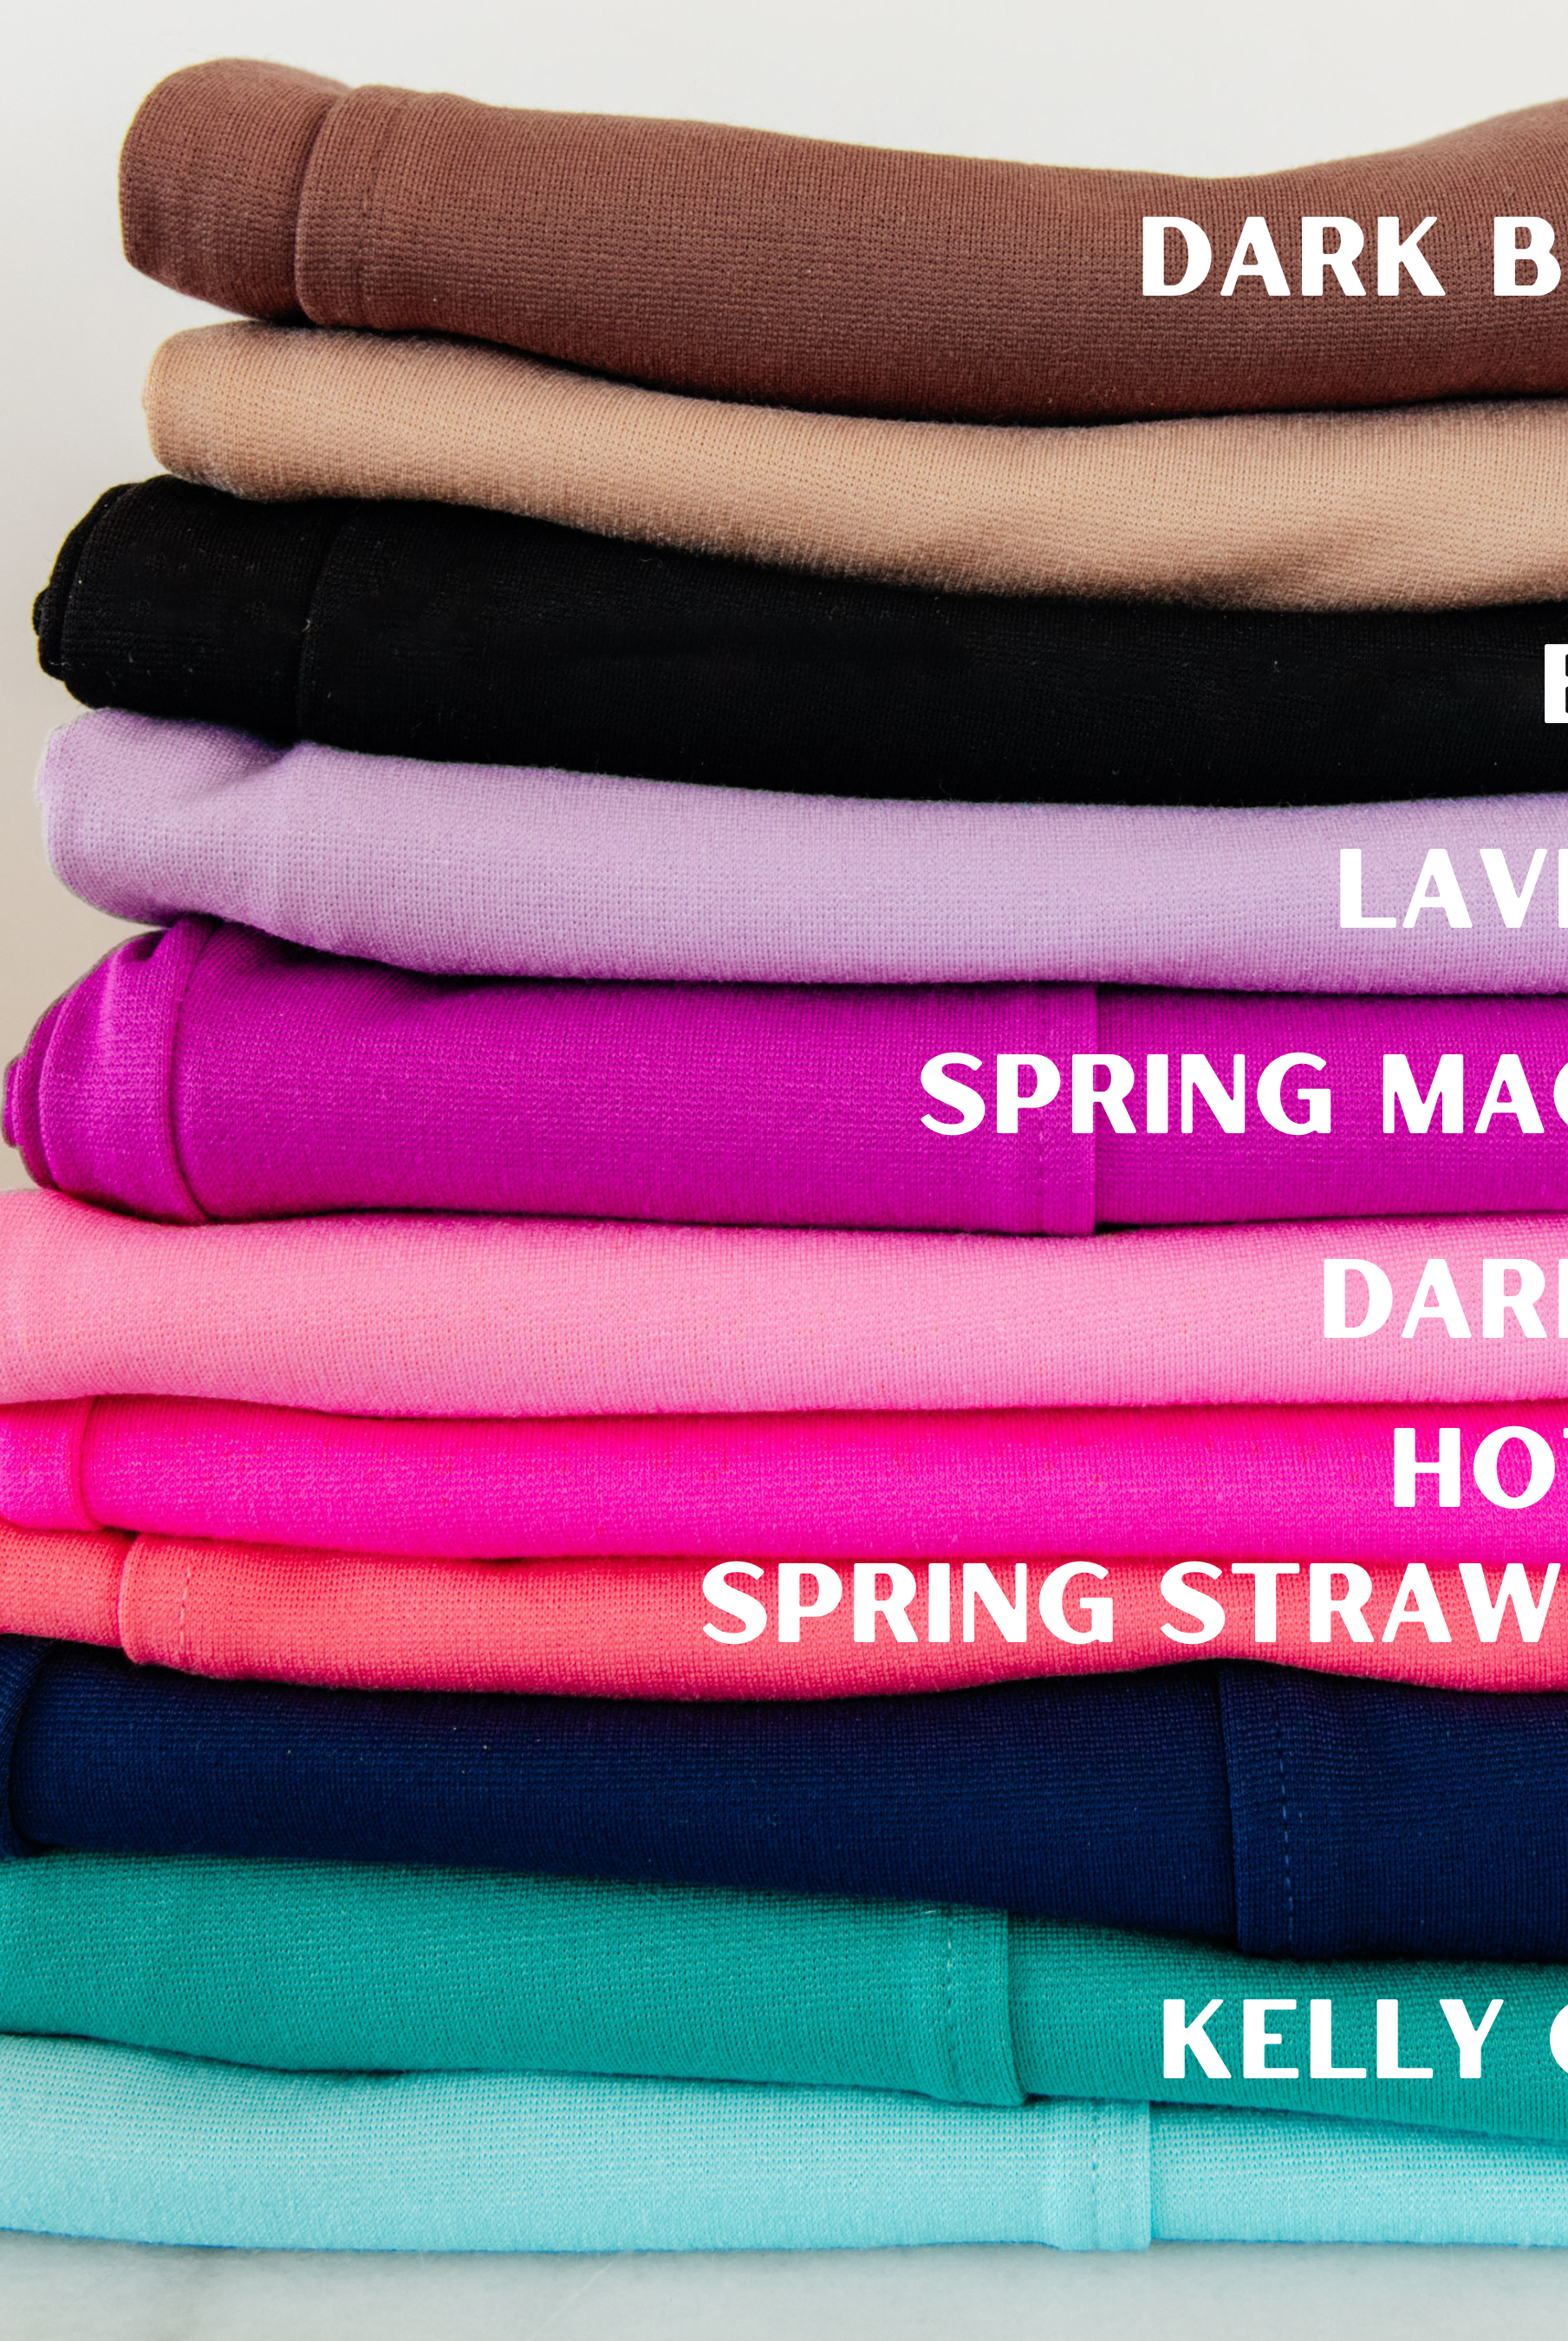 Magic Flare Pants in Eleven Colors-Womens-Ave Shops-Urban Threadz Boutique, Women's Fashion Boutique in Saugatuck, MI